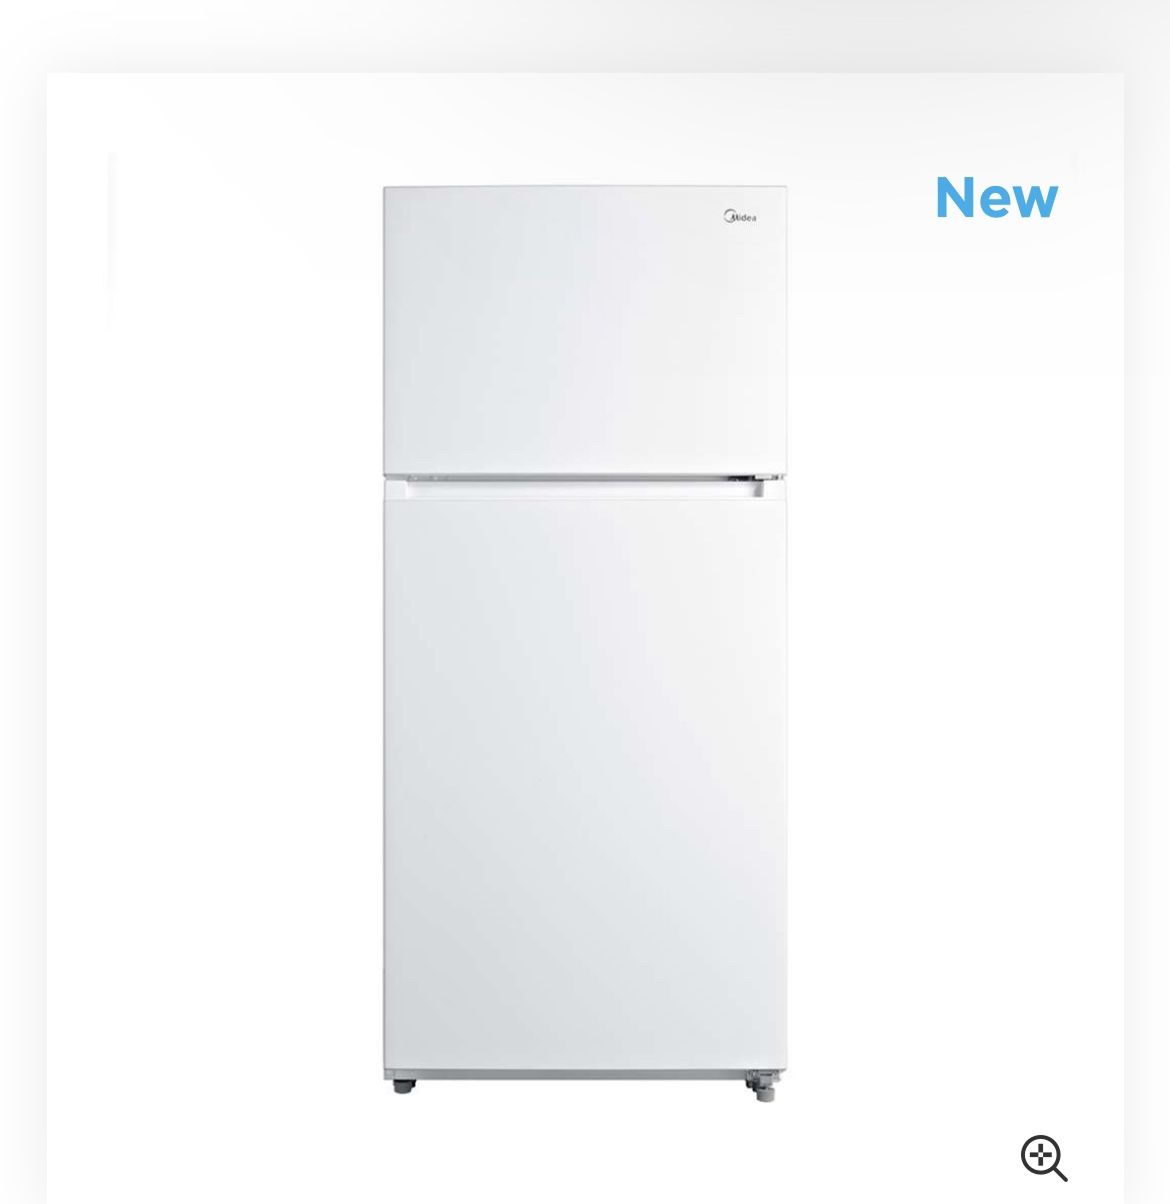 Brand New In Box Midea 18-cu ft Top-Freezer Refrigerator (White) ENERGY STAR